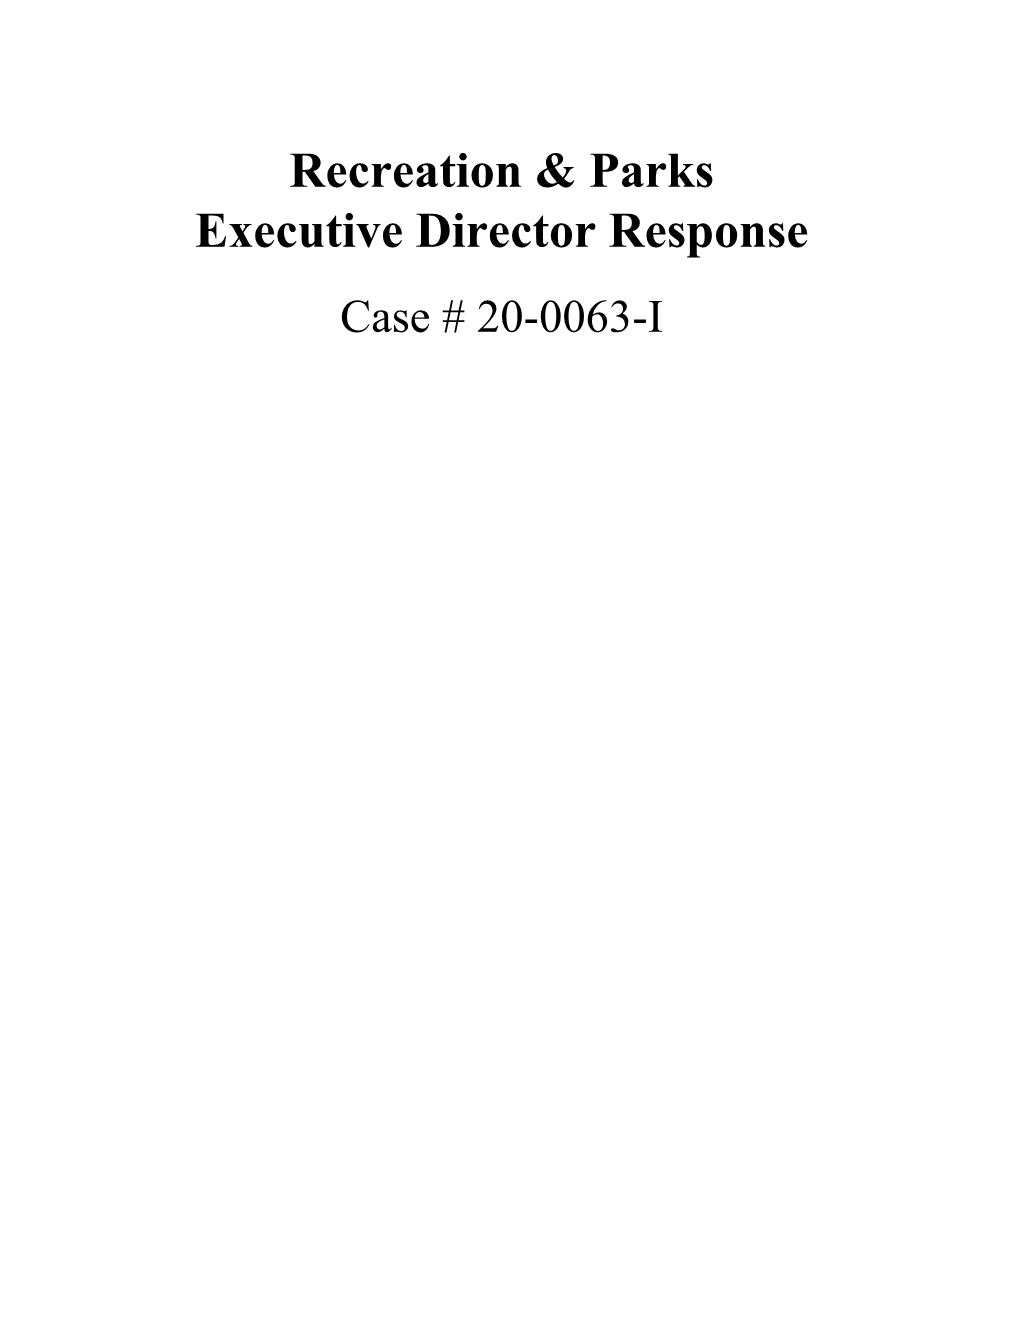 Recreation & Parks Executive Director Response